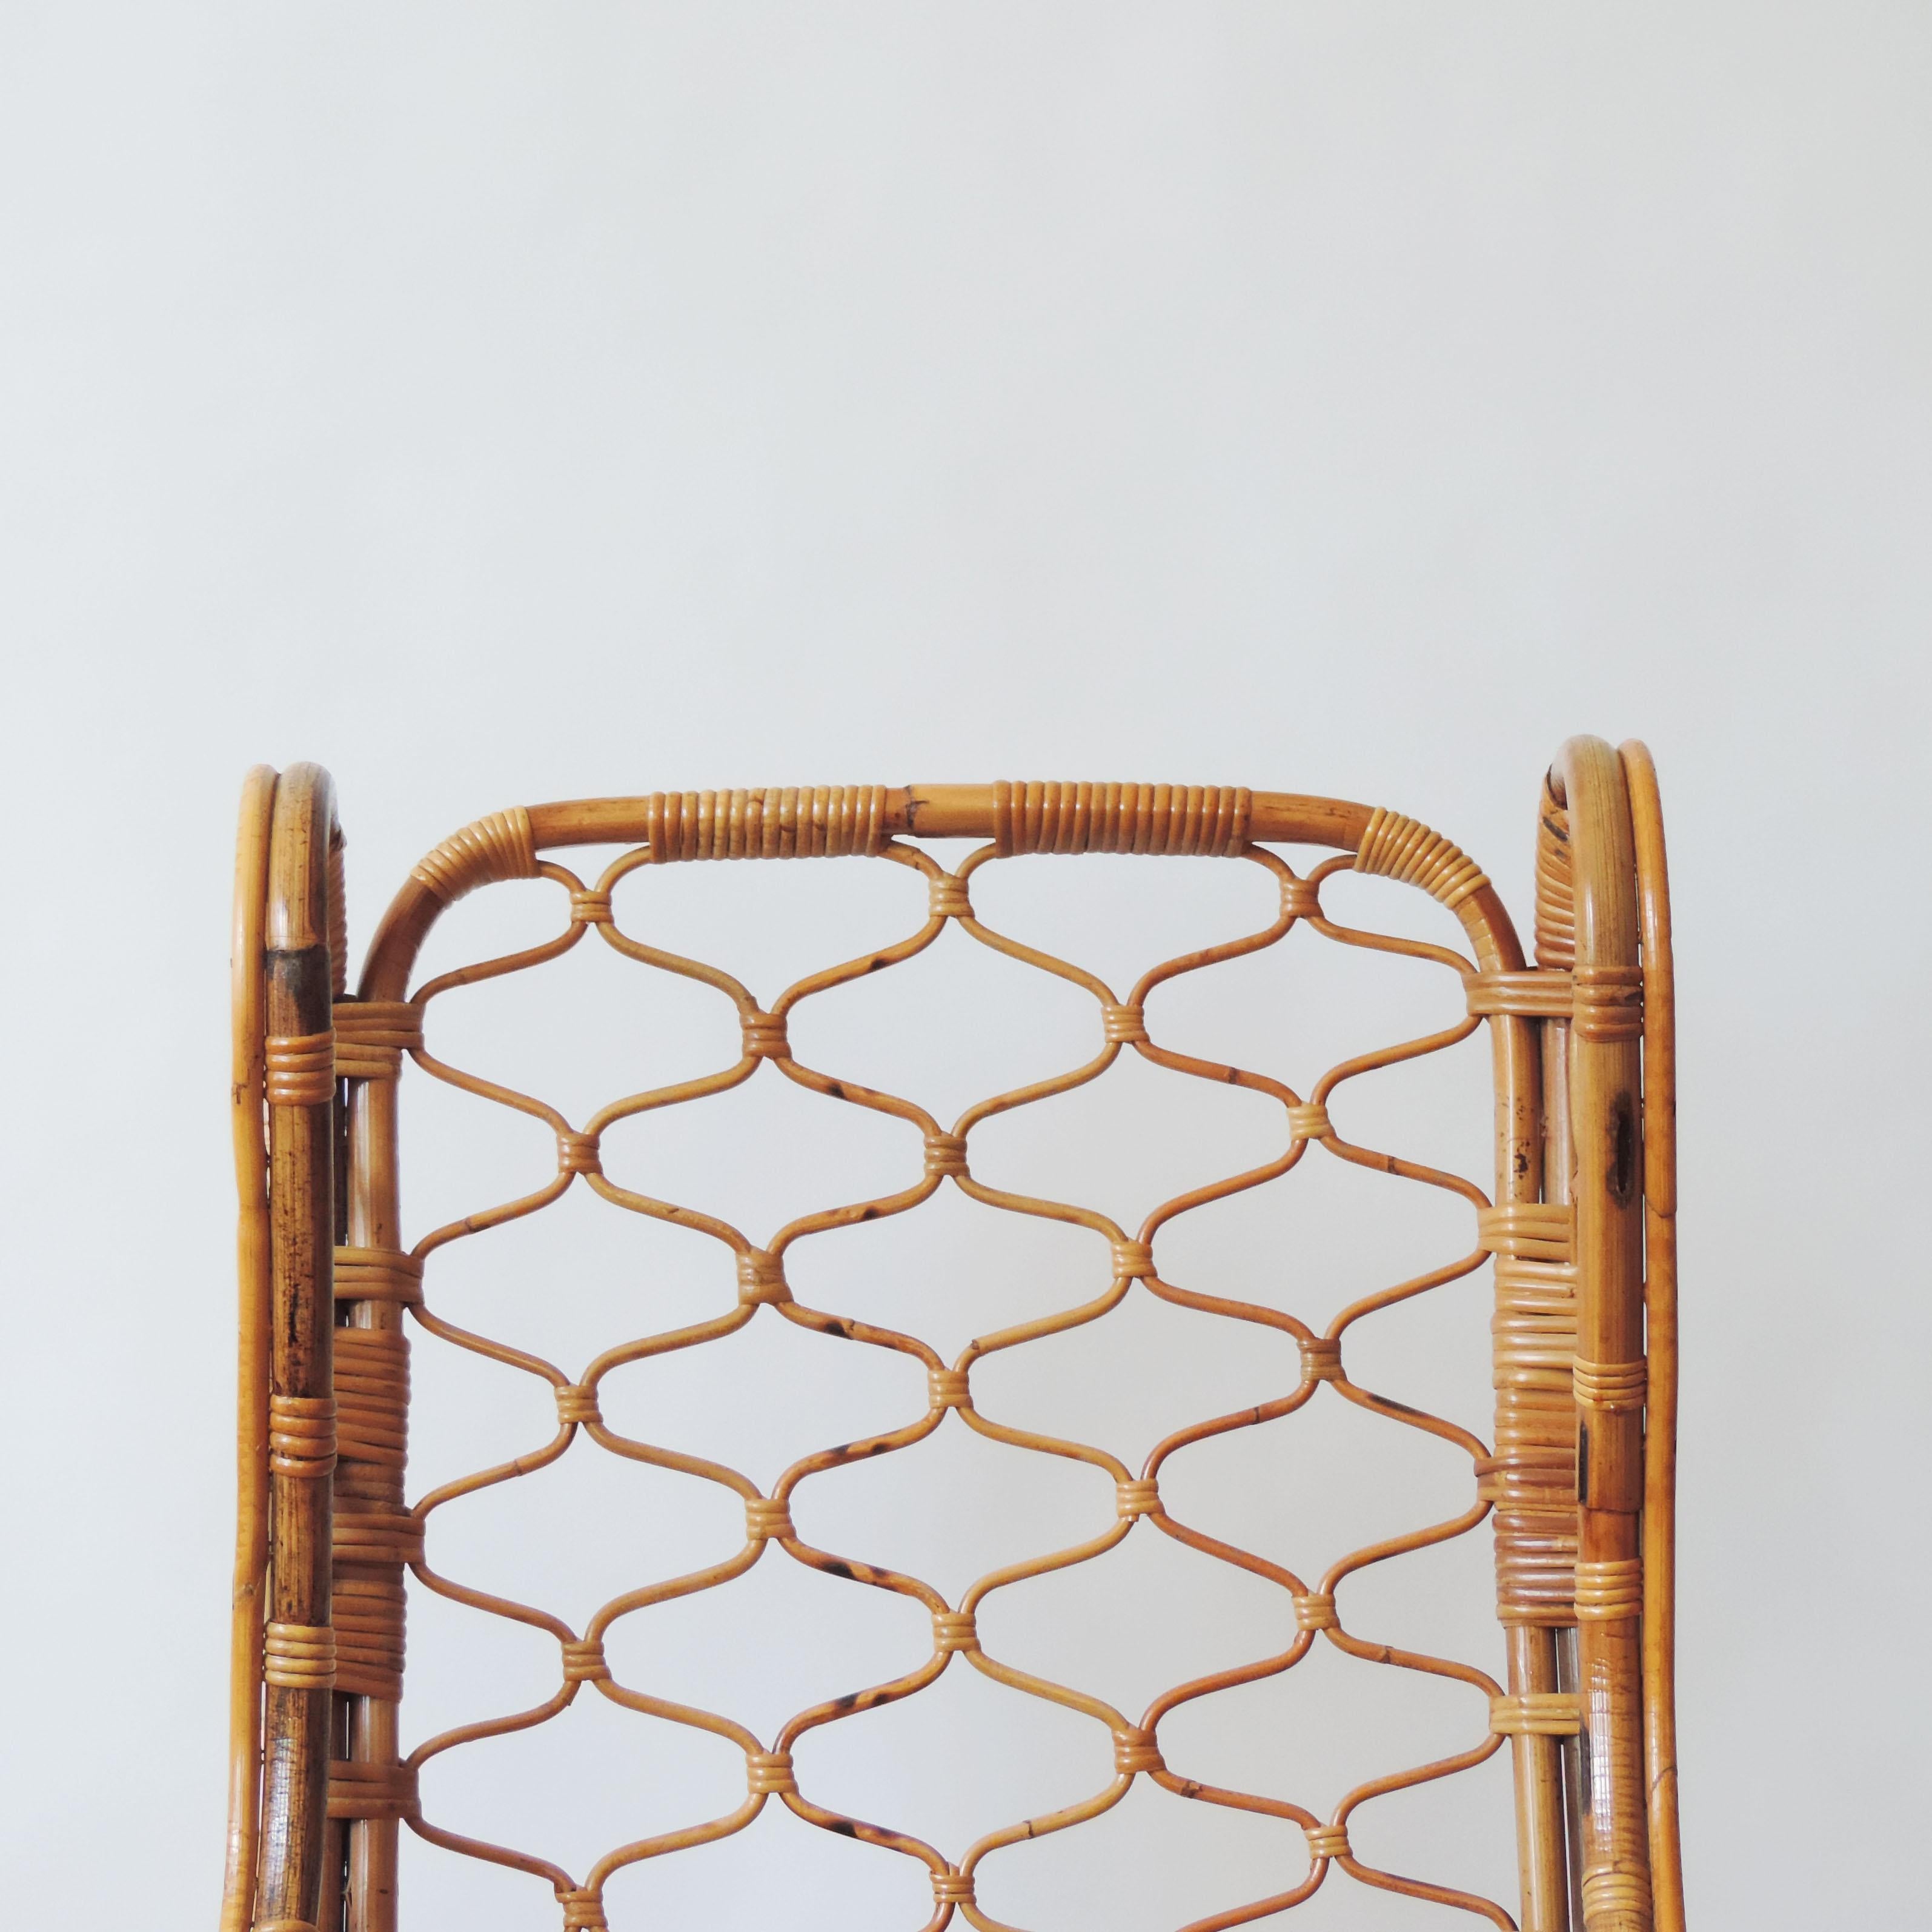 Intricate Italian 1950s bamboo armchair.